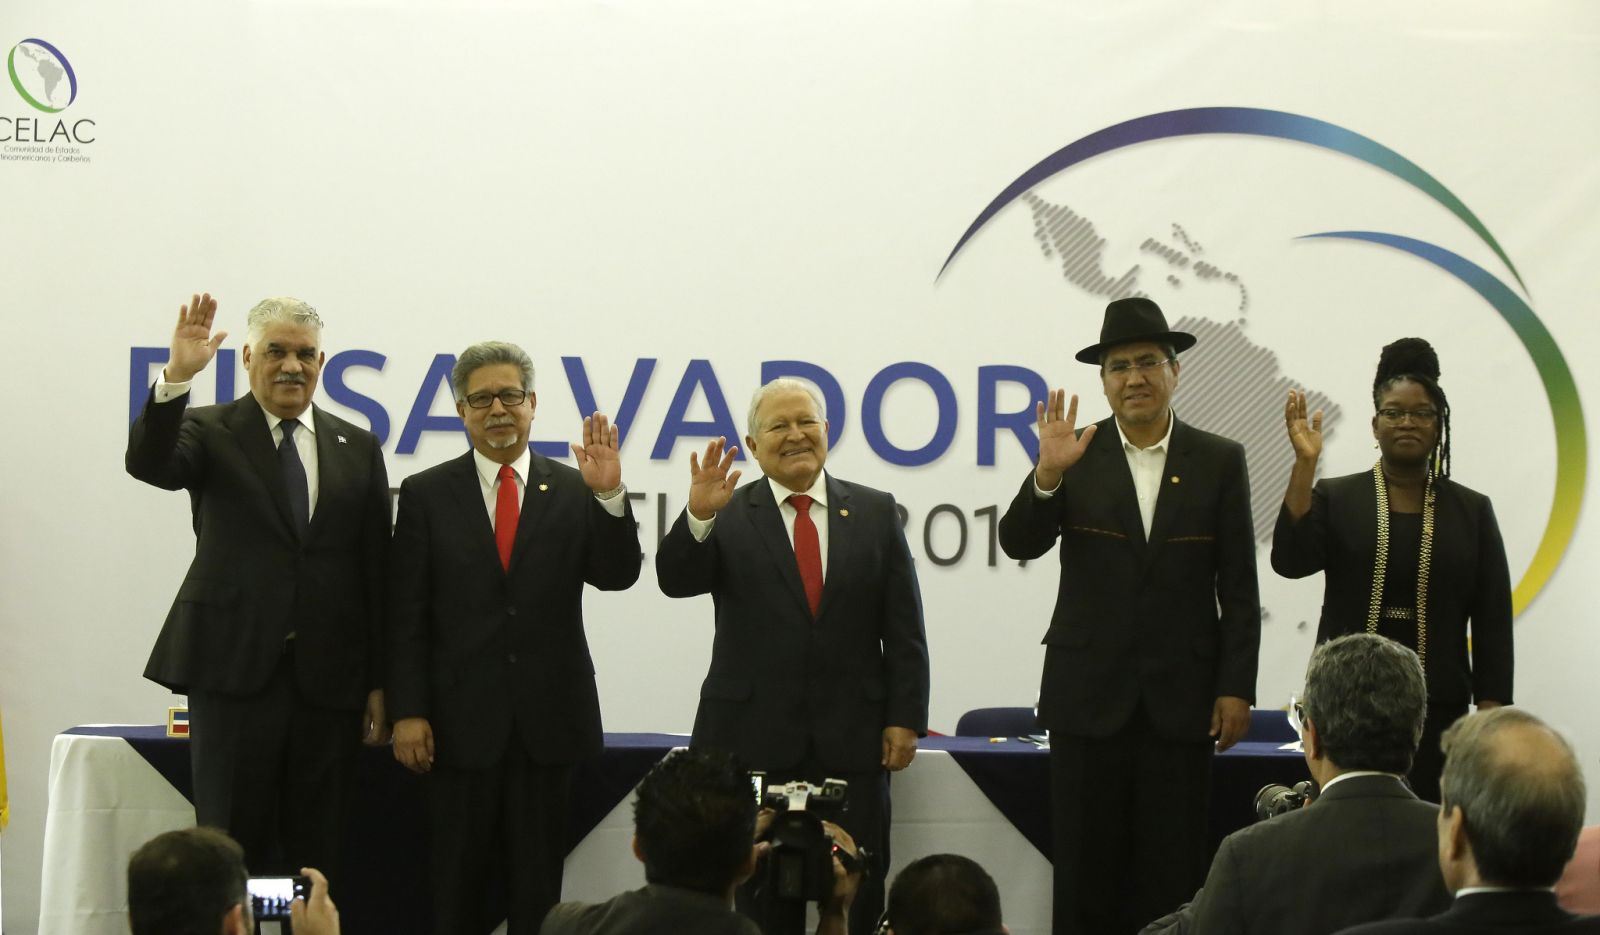 El Salvador | Foto oficial de la PPT de CELAC 2019